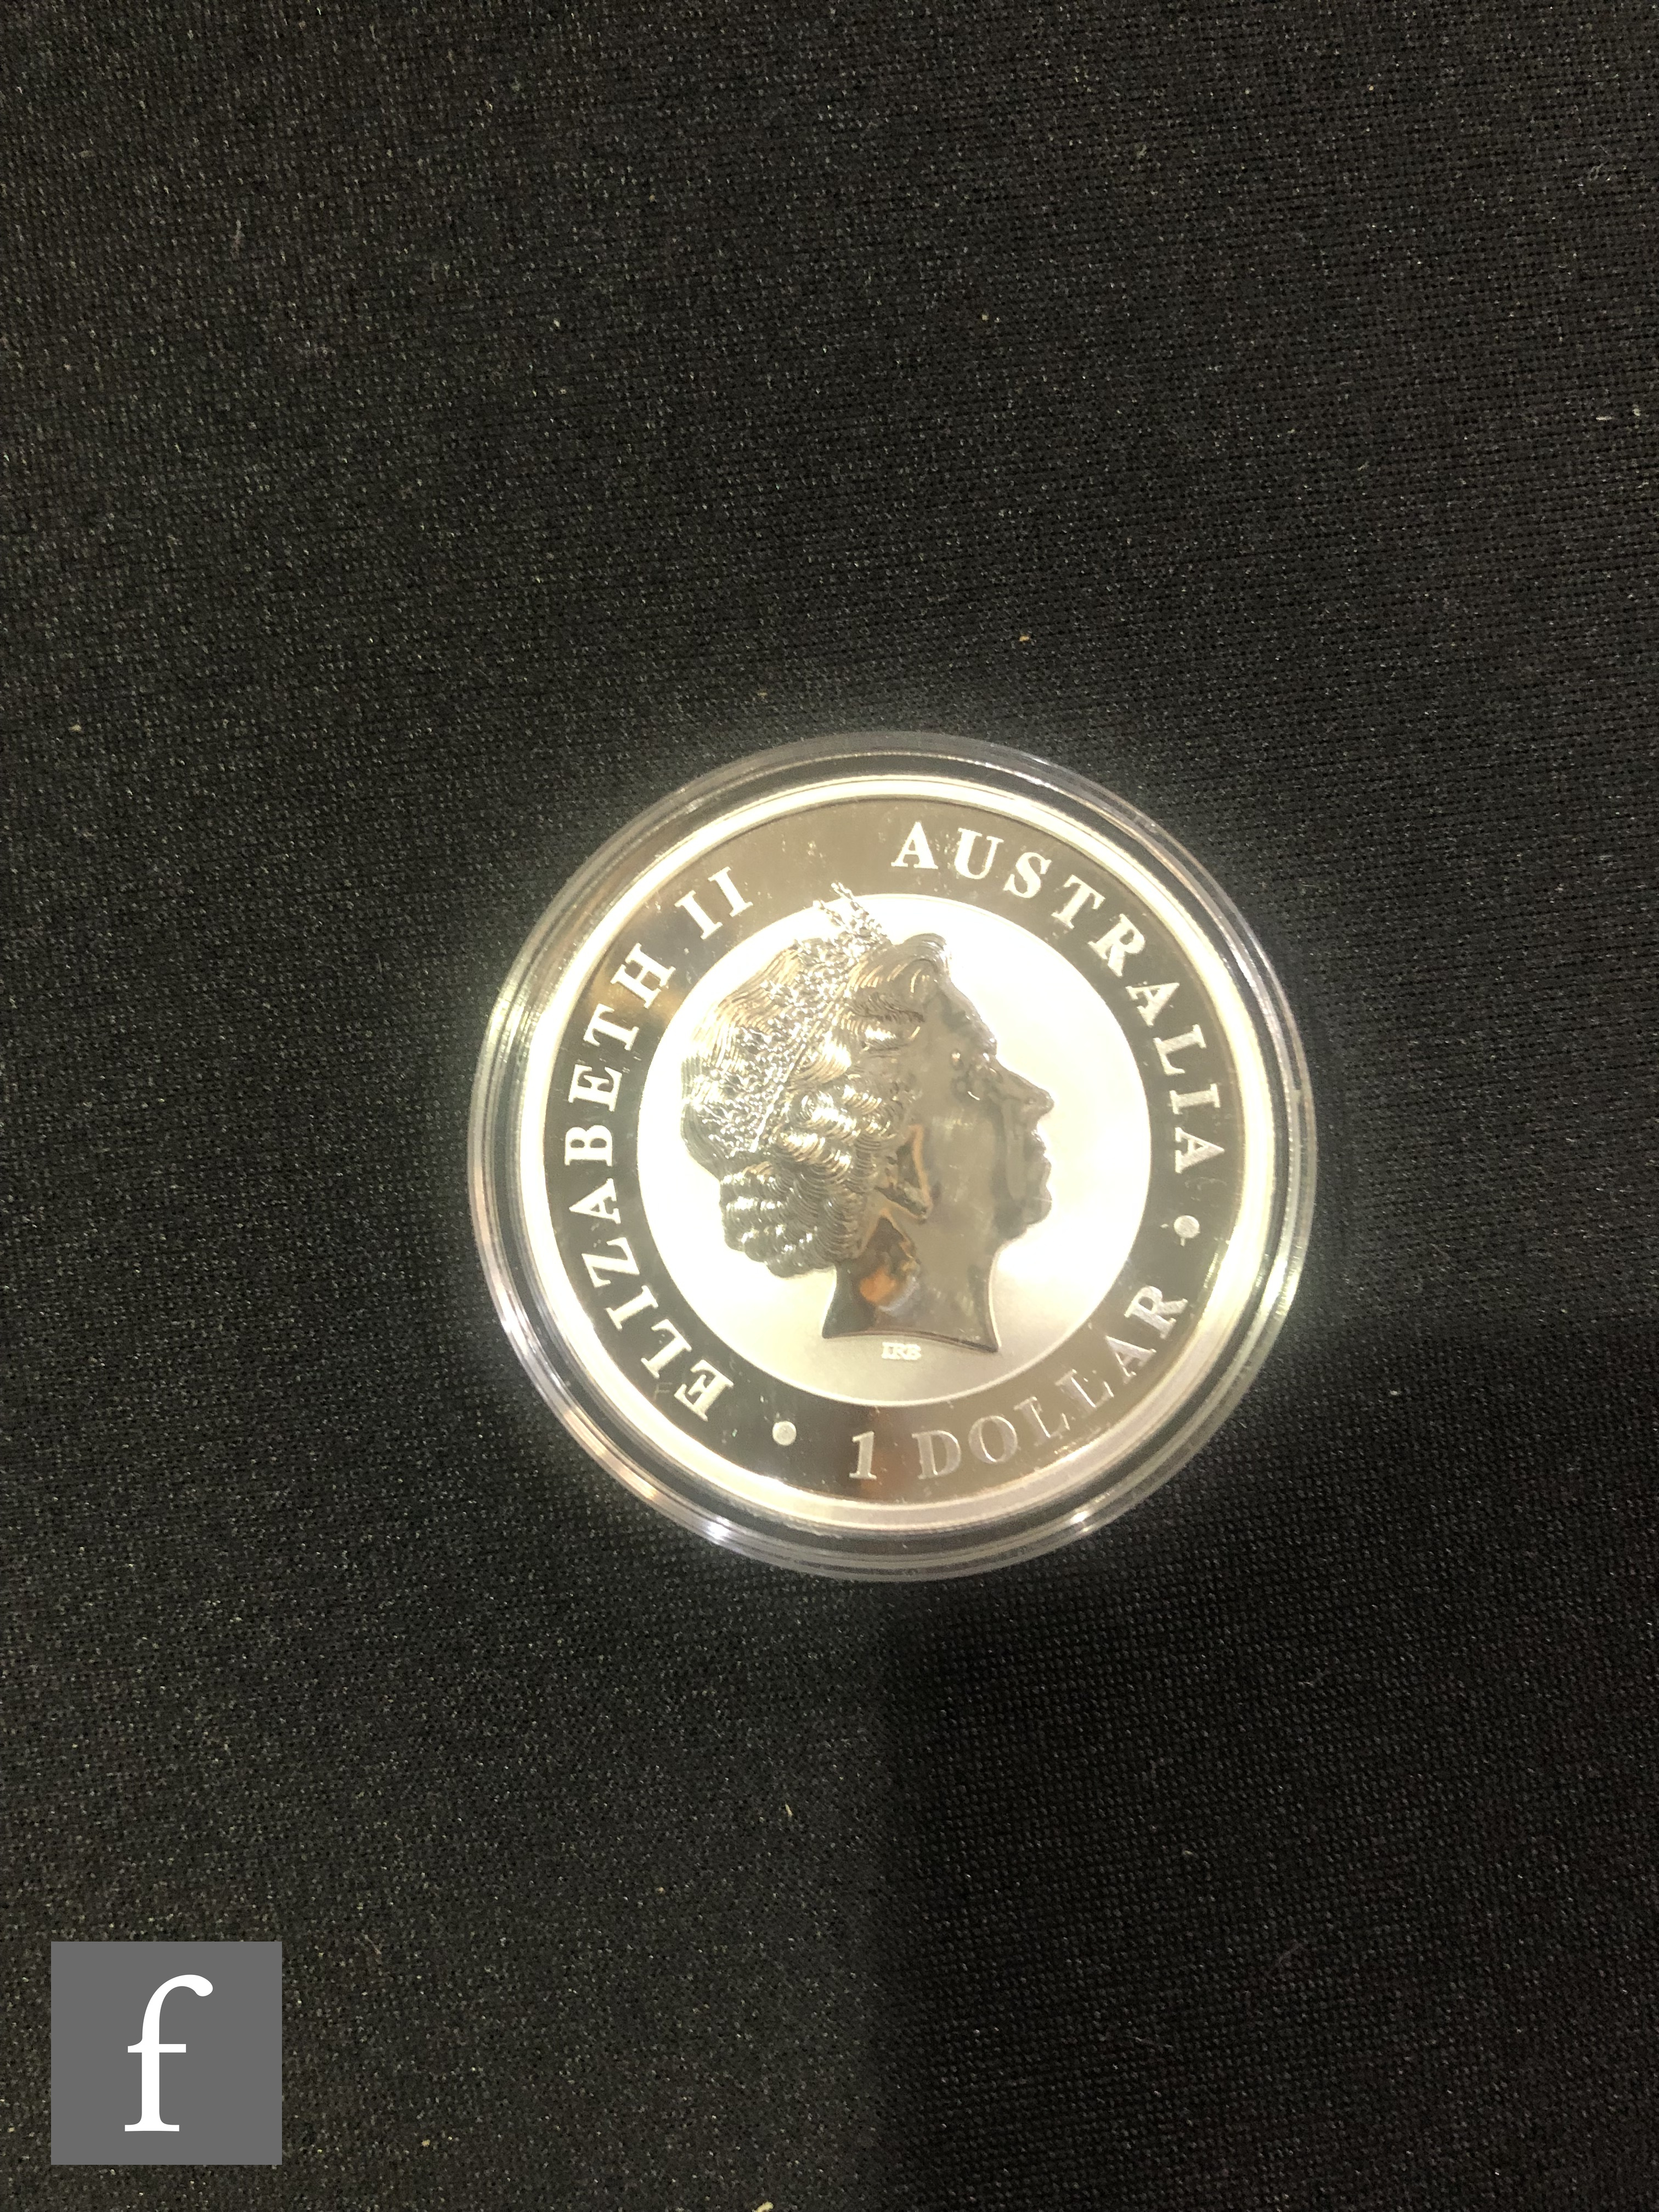 An Elizabeth II 2014 Britannia silver proof coin cased, Australia one dollar silver Platypus, - Image 2 of 13